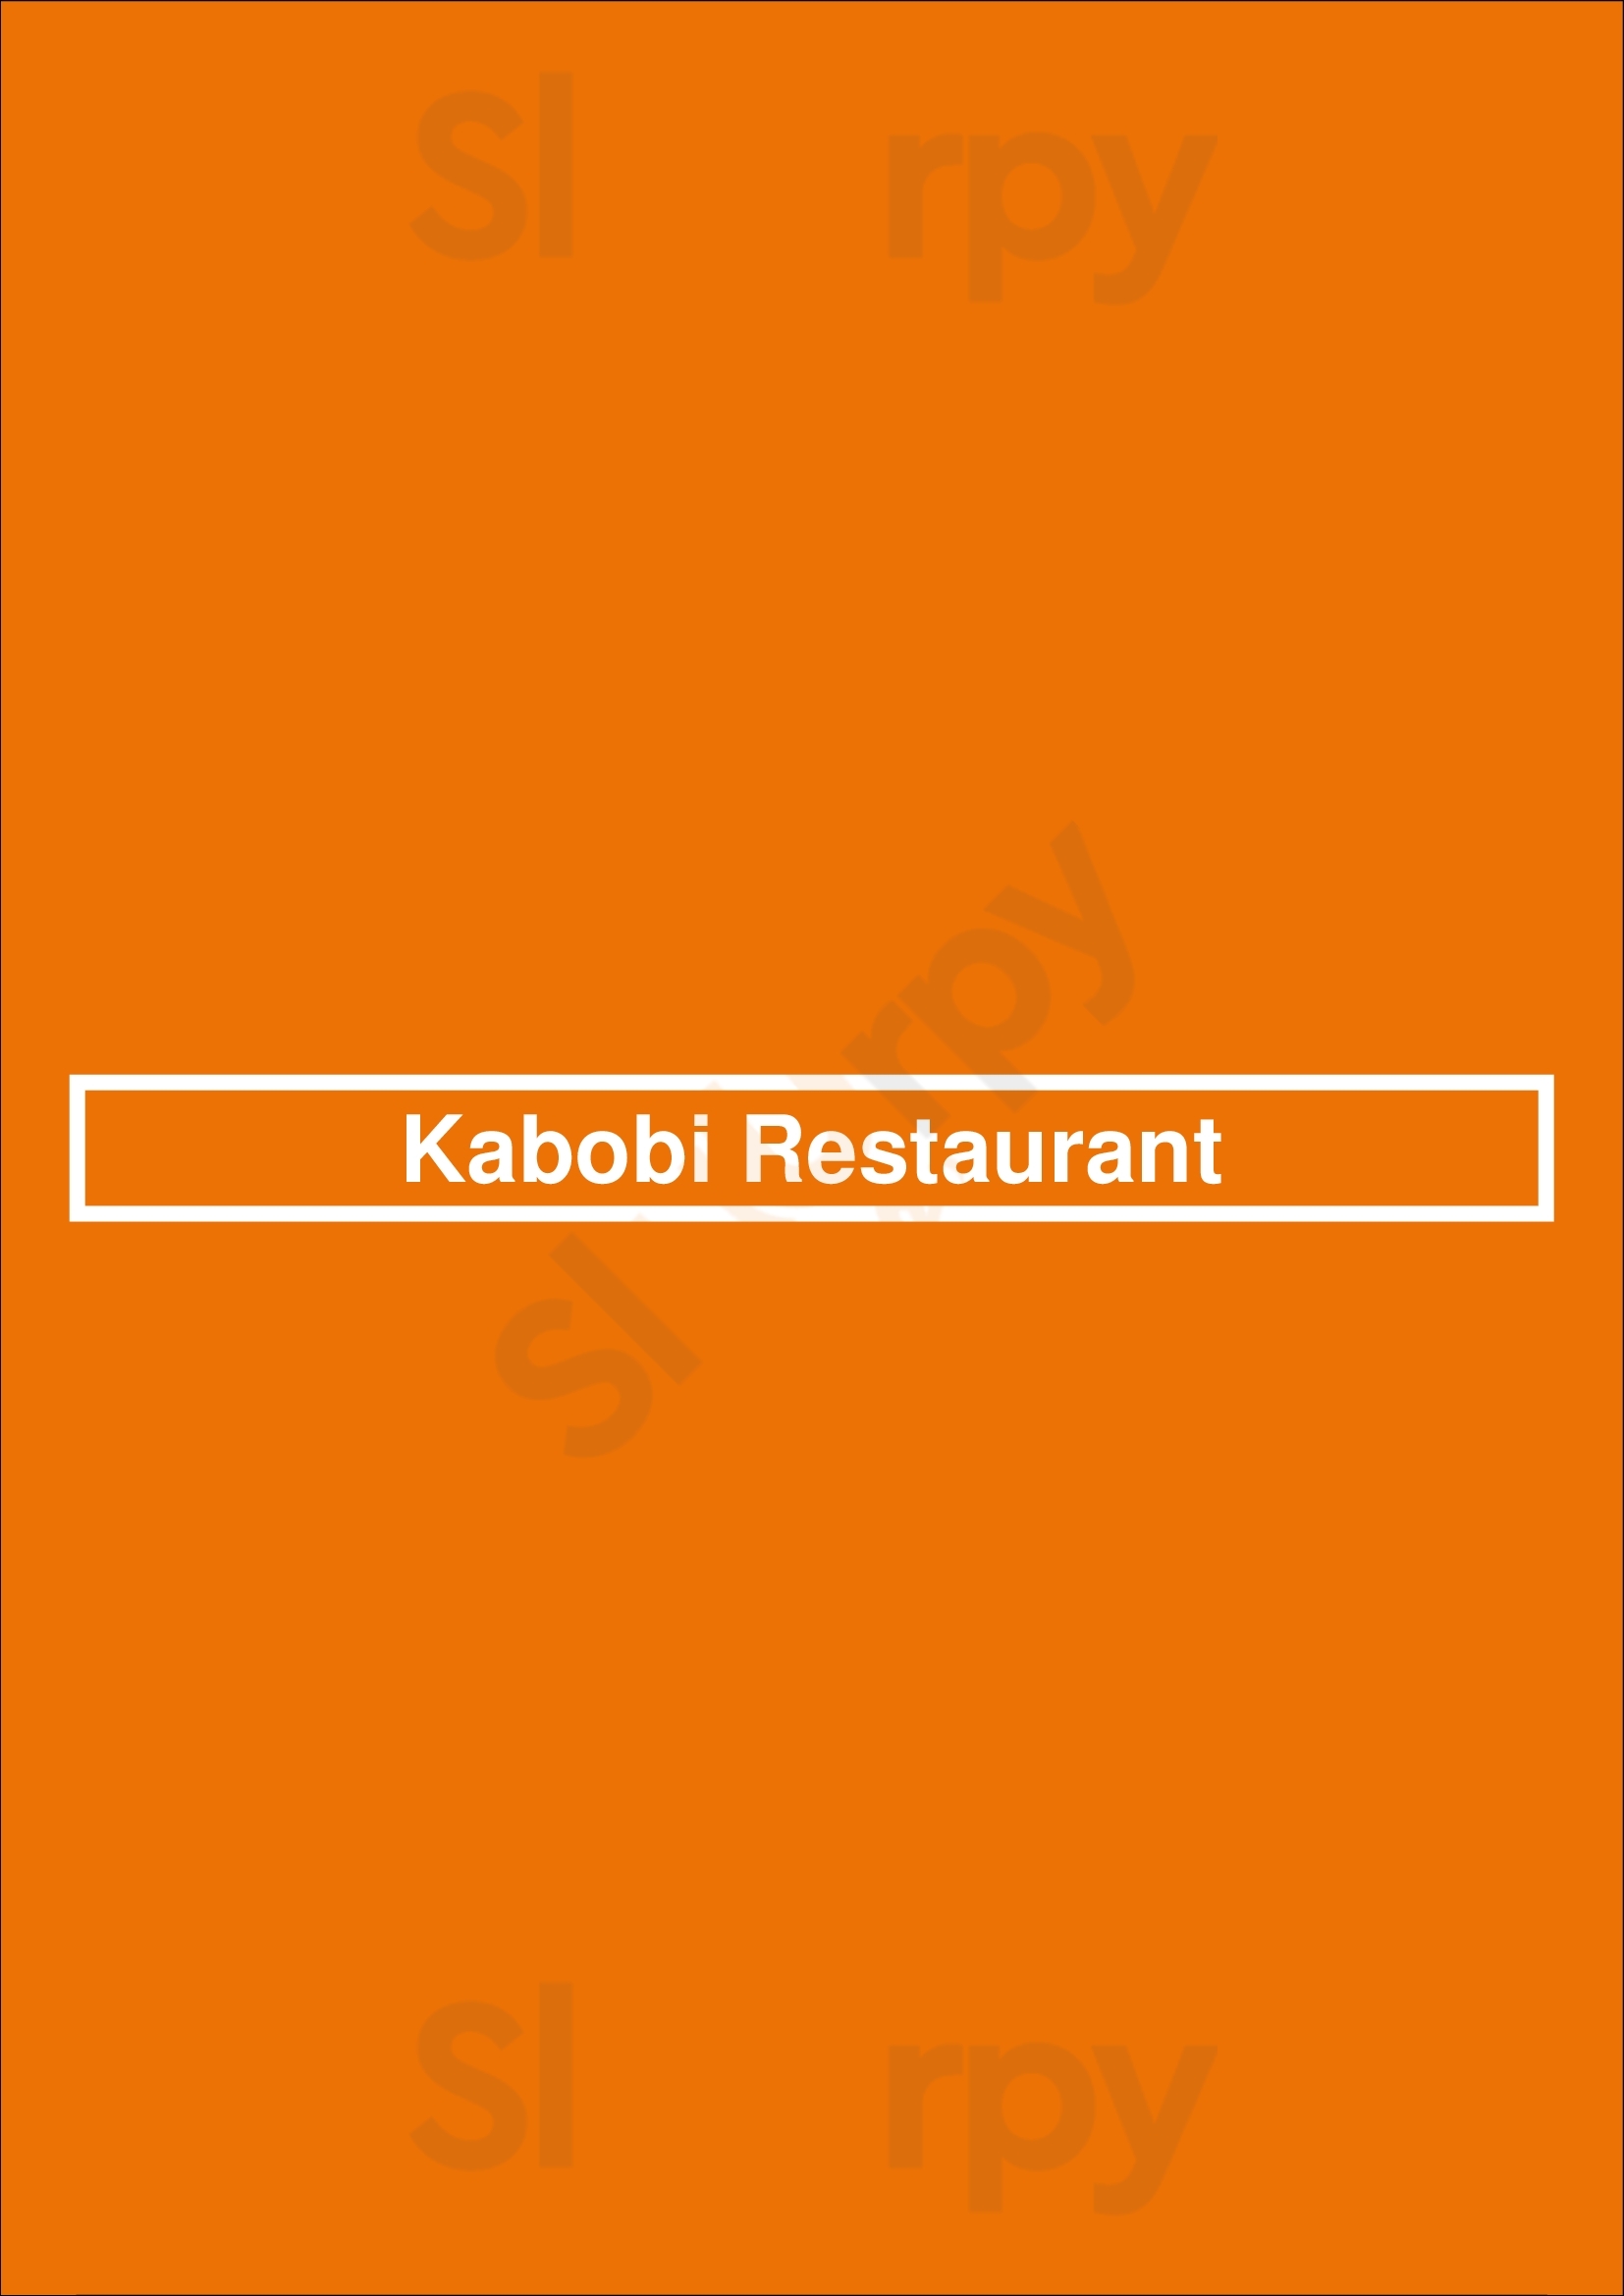 Kabobi Restaurant Philadelphia Menu - 1